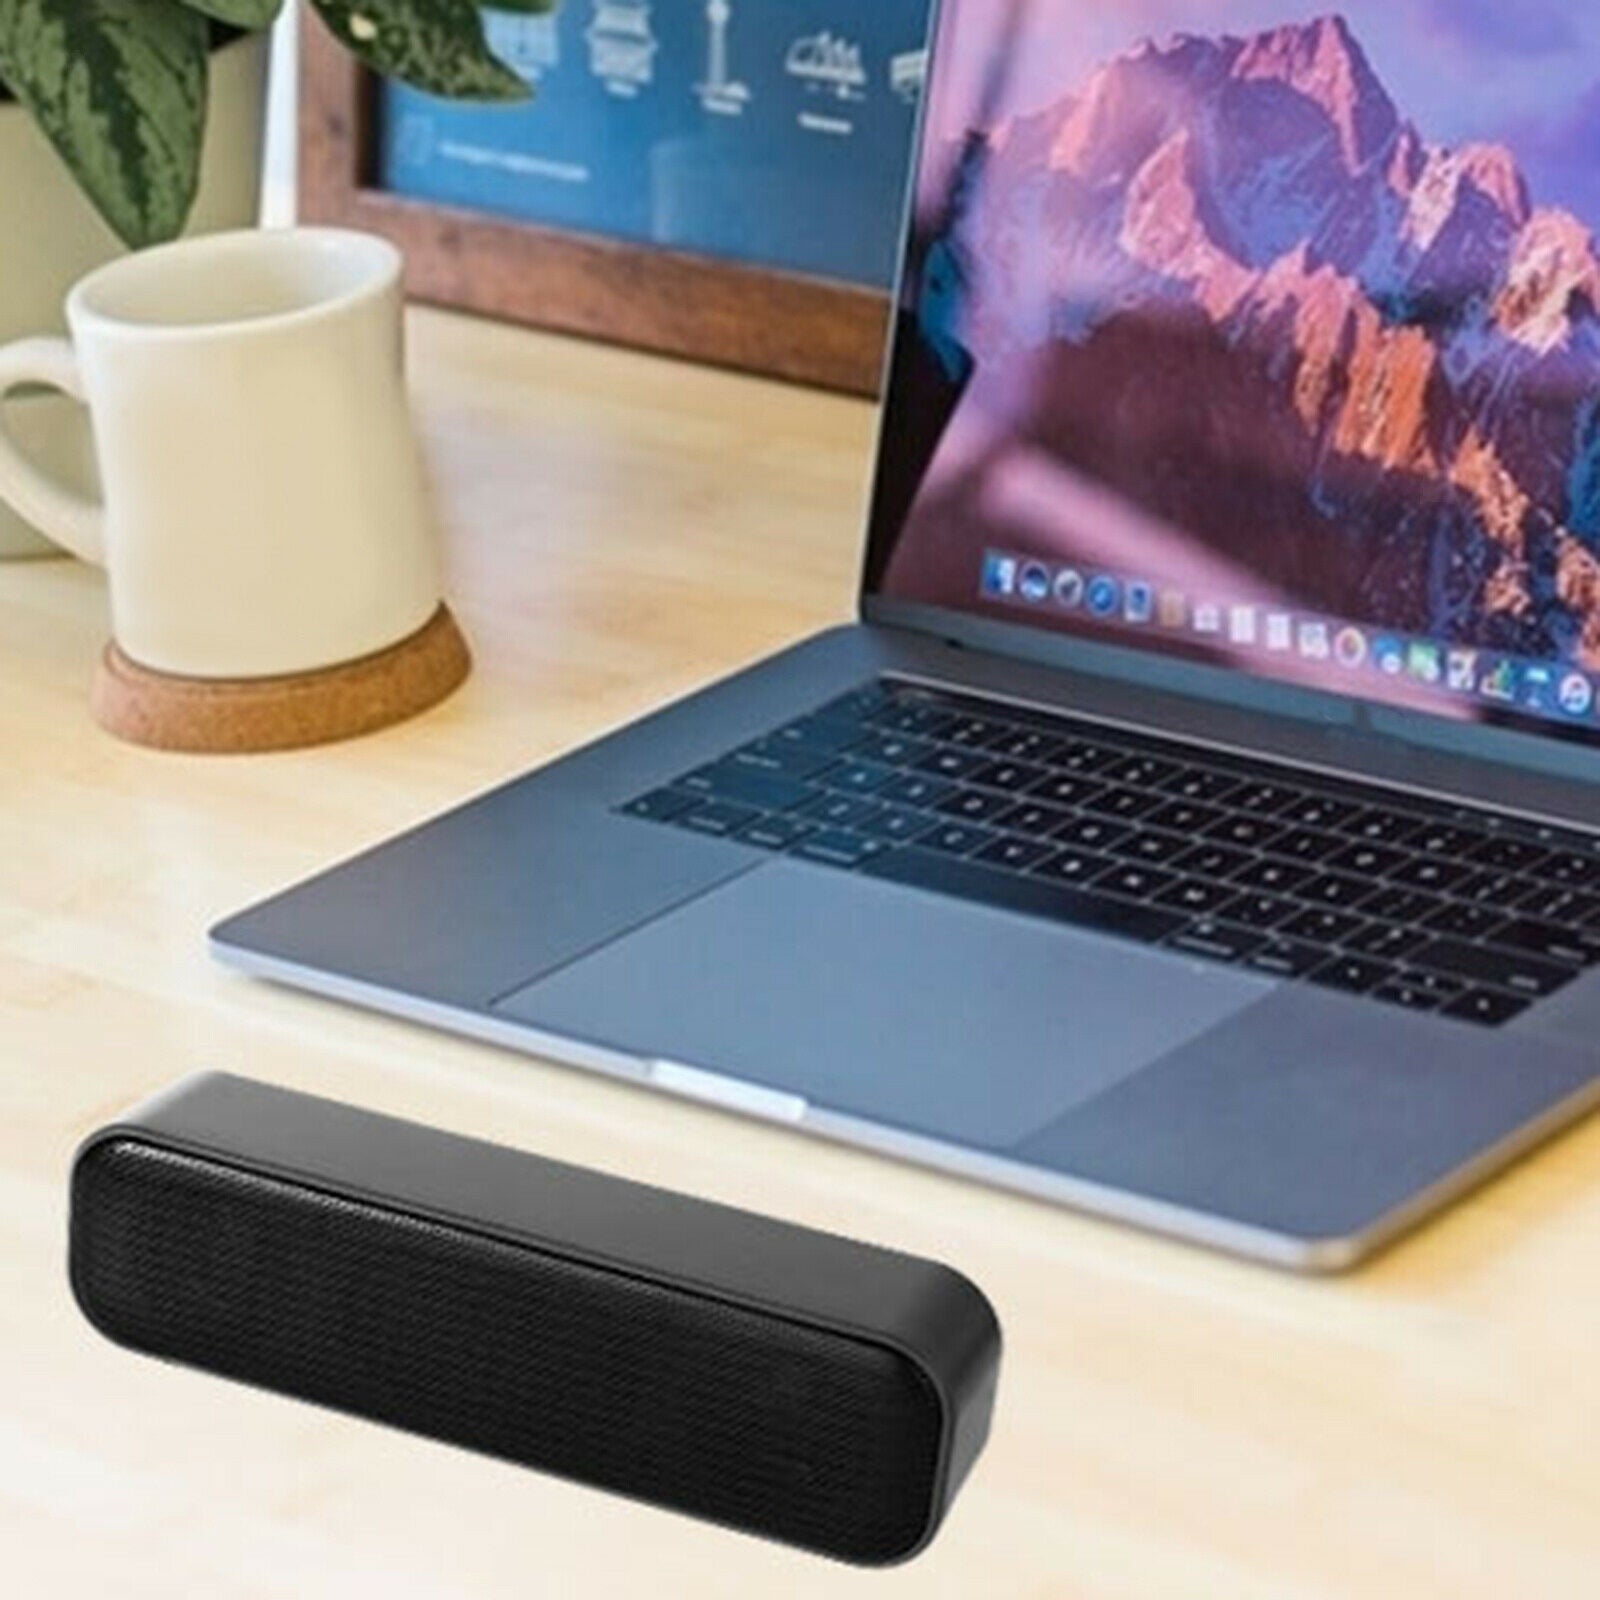 Mini Speaker Rich Bass Laptop Soundbar Multimedia Musical Player for Home